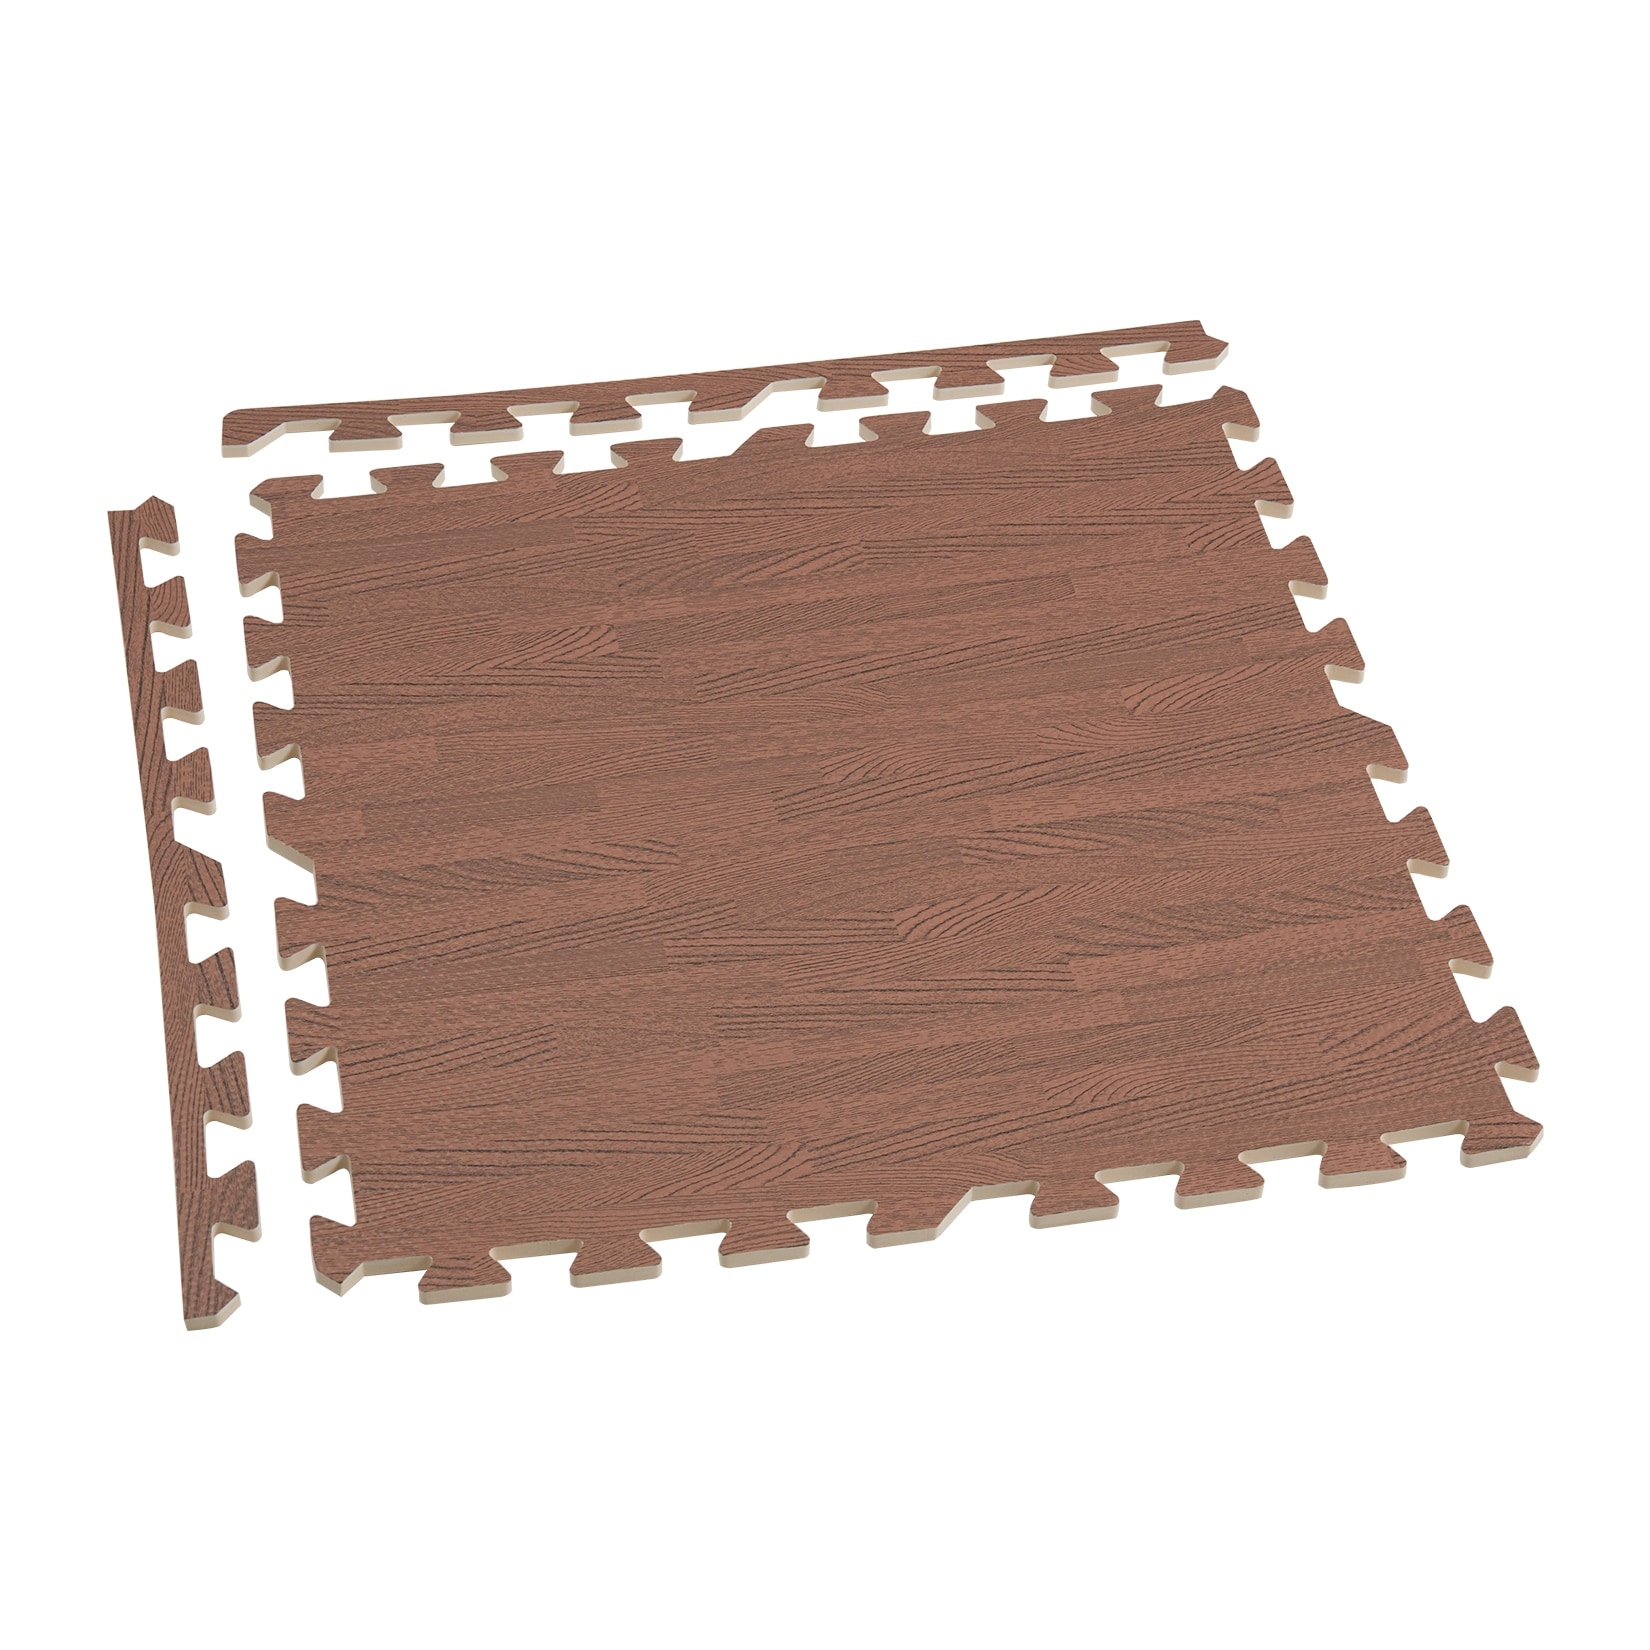 24 Pcs (4x6 Arrangement) Multicolor Puzzle Floor Mats, 12 X 12 EVA Foam  Interlocking Tiles, Comfortable Exercise and Play Mat, 0.47 Thick(Color:4)